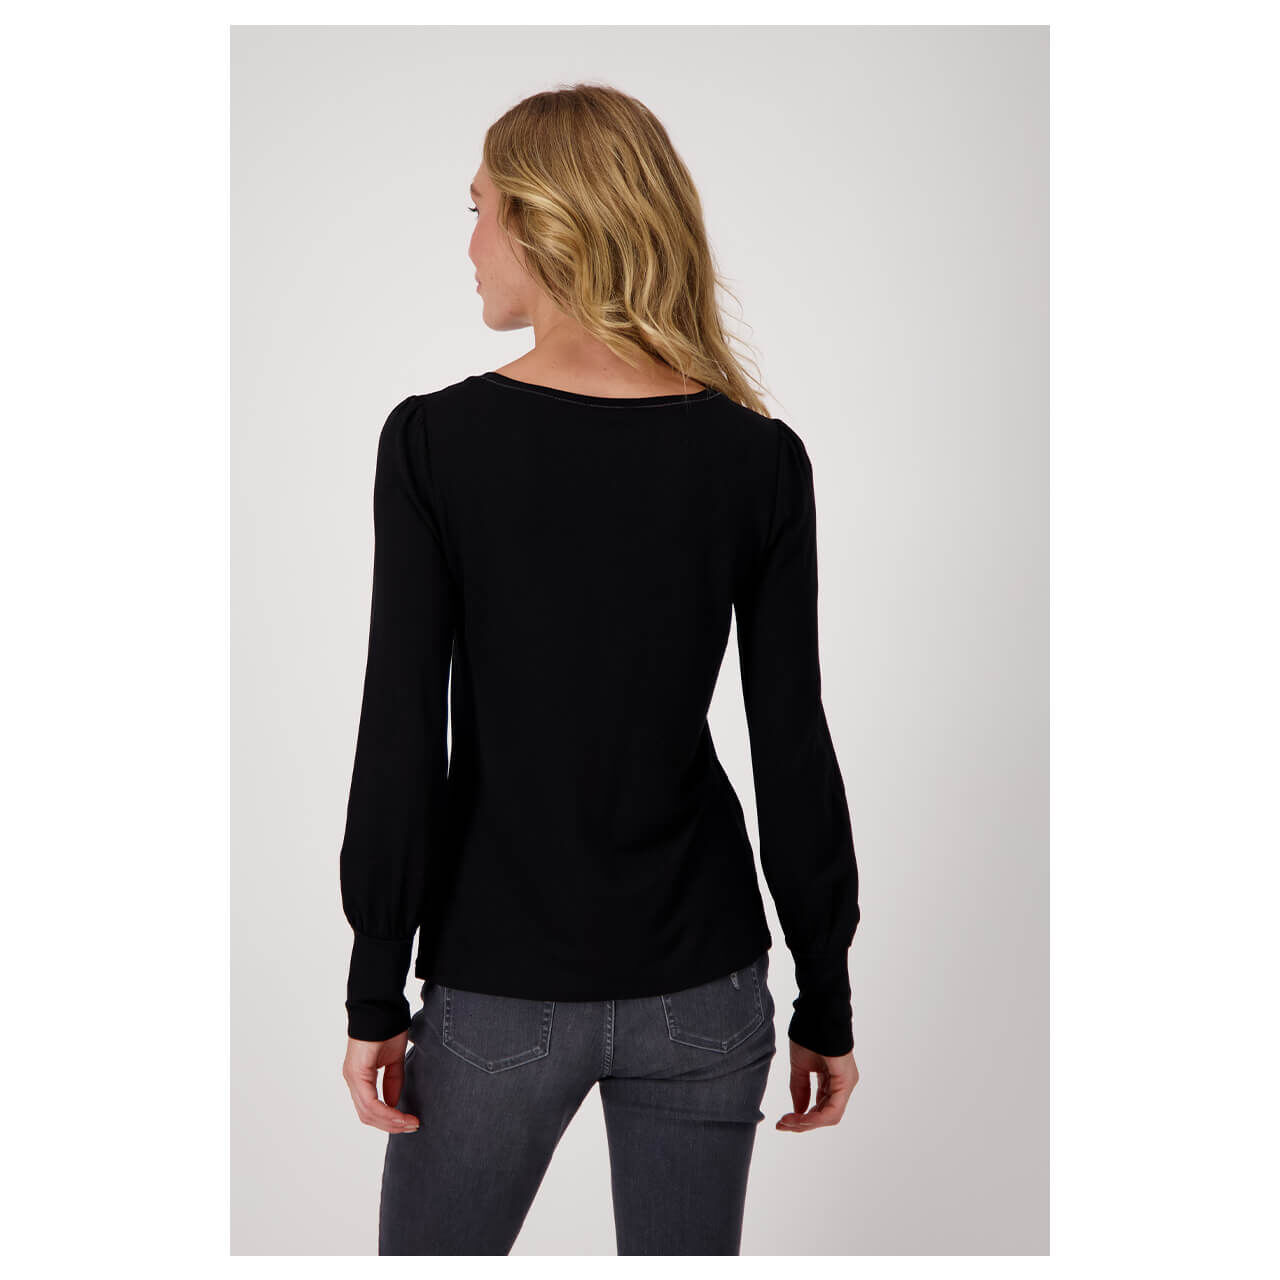 Monari Damen Langarm Shirt black glitter couture